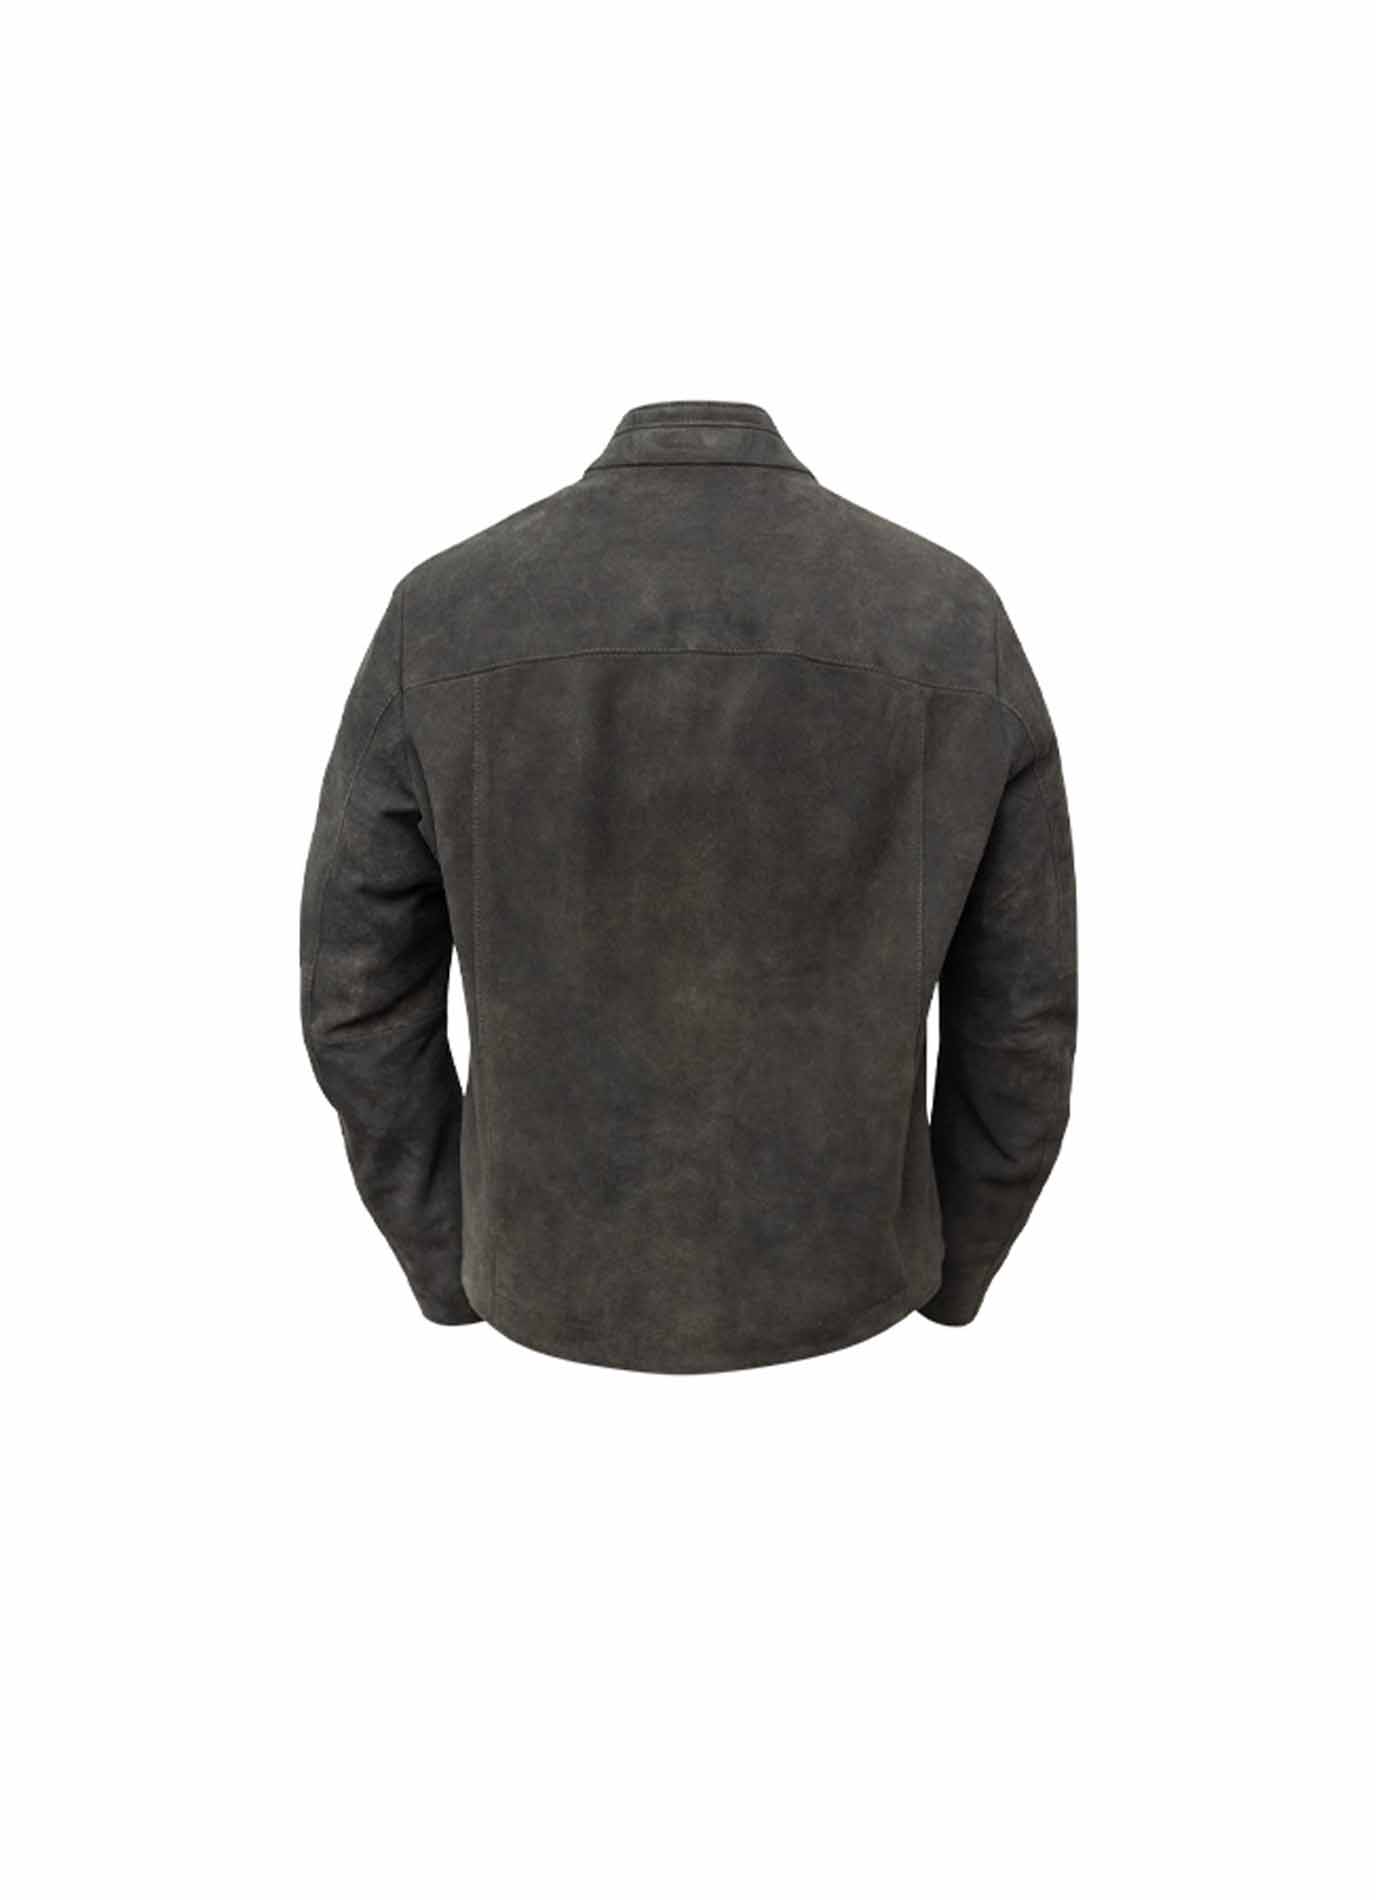 Goat Leather Jacket Men “Grenada”, midnight brown